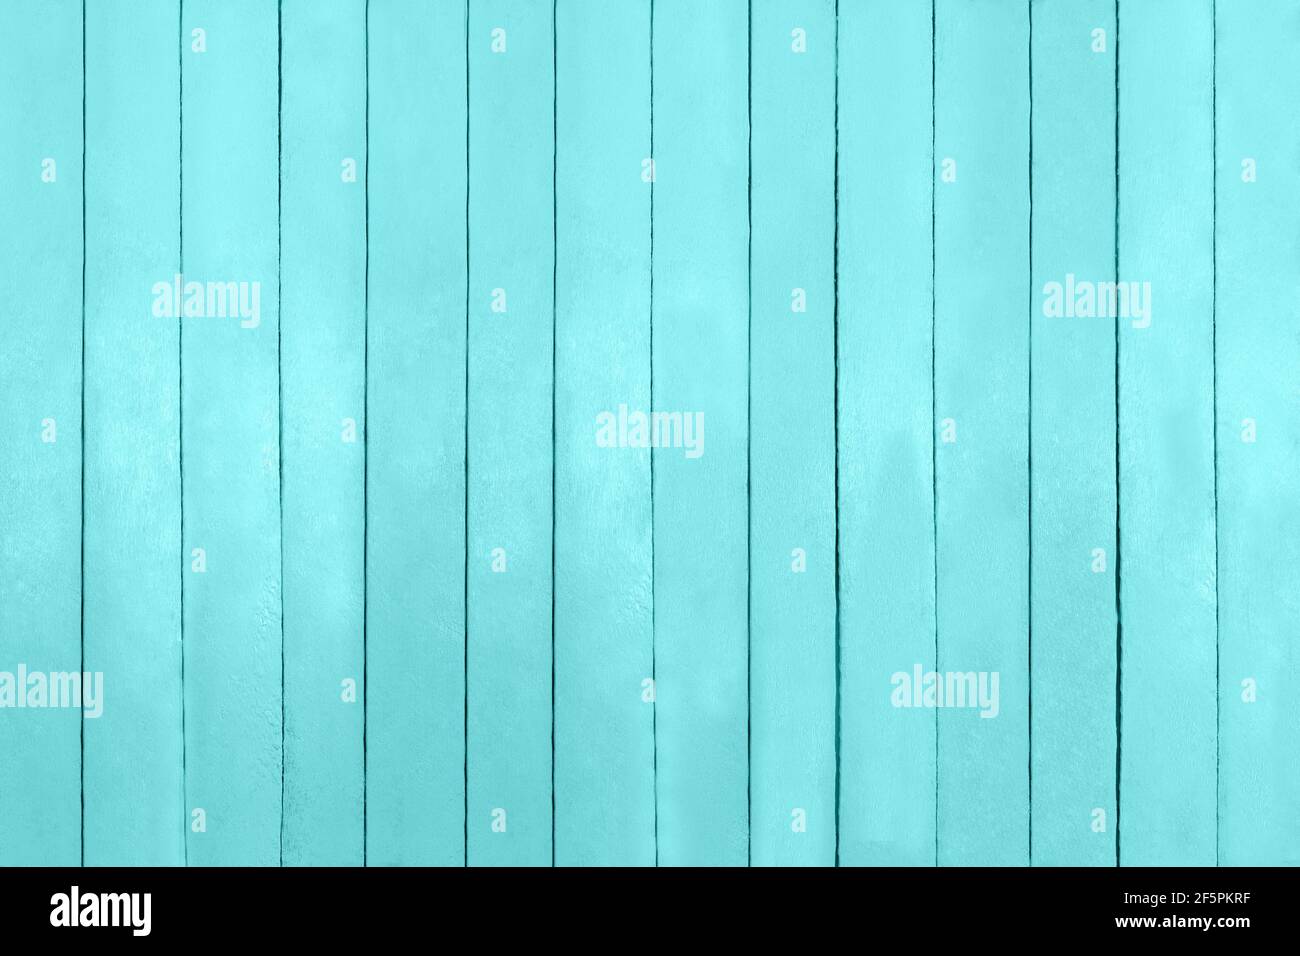 Aquamarine, turquoise, blue boards. Summer, sparing background. Pier, beach, marine. Copy space Stock Photo